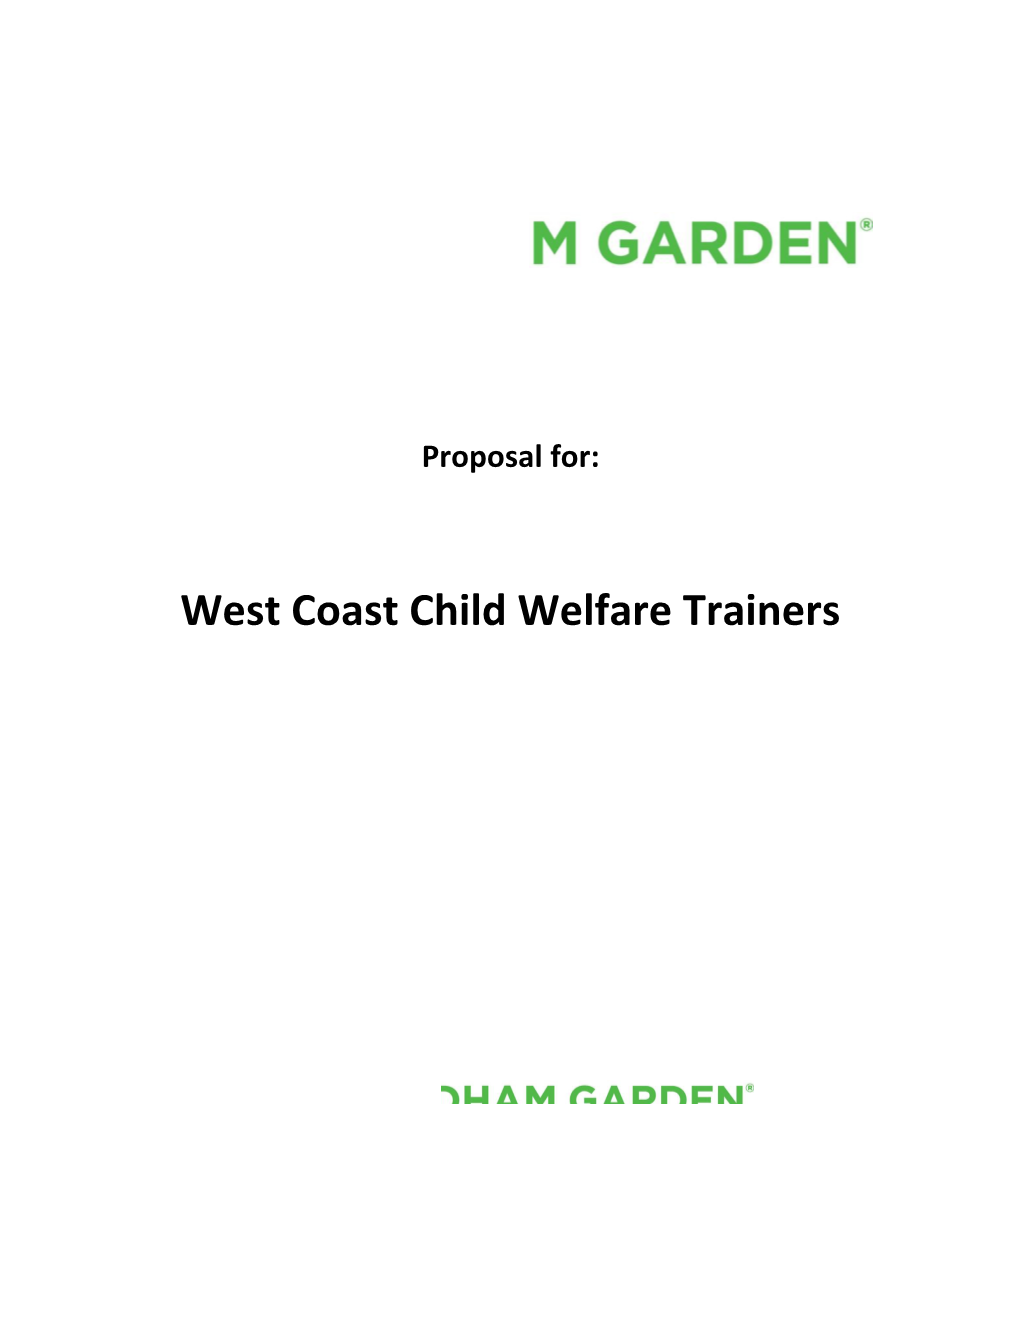 West Coast Child Welfare Trainers